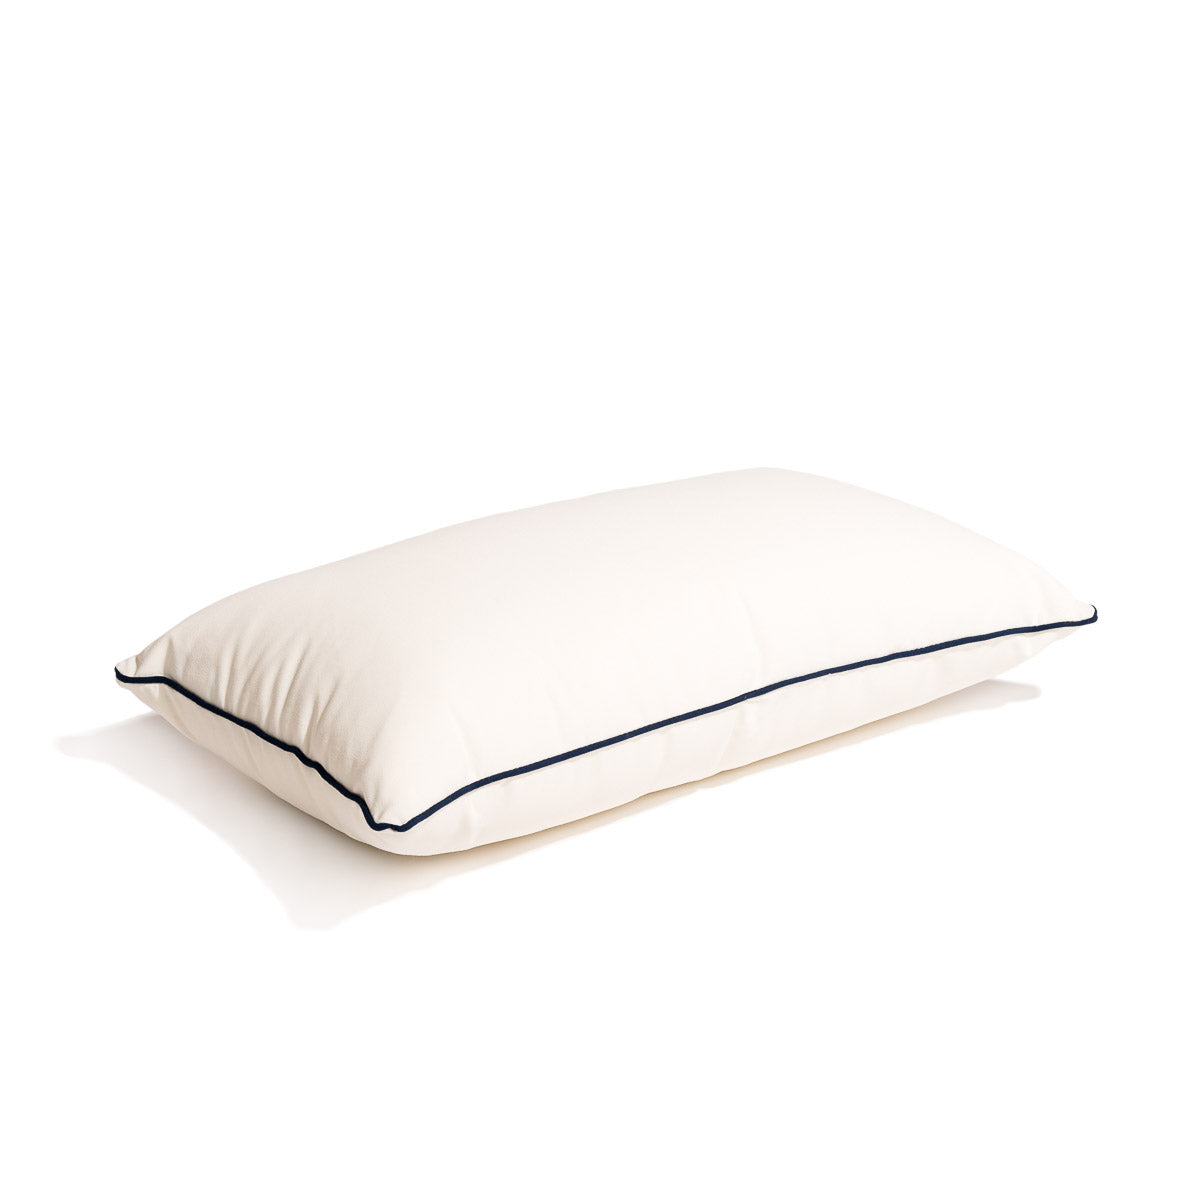 The Rectangle Throw Pillow - Rivie White Rectangle Throw Pillow Business & Pleasure Co 